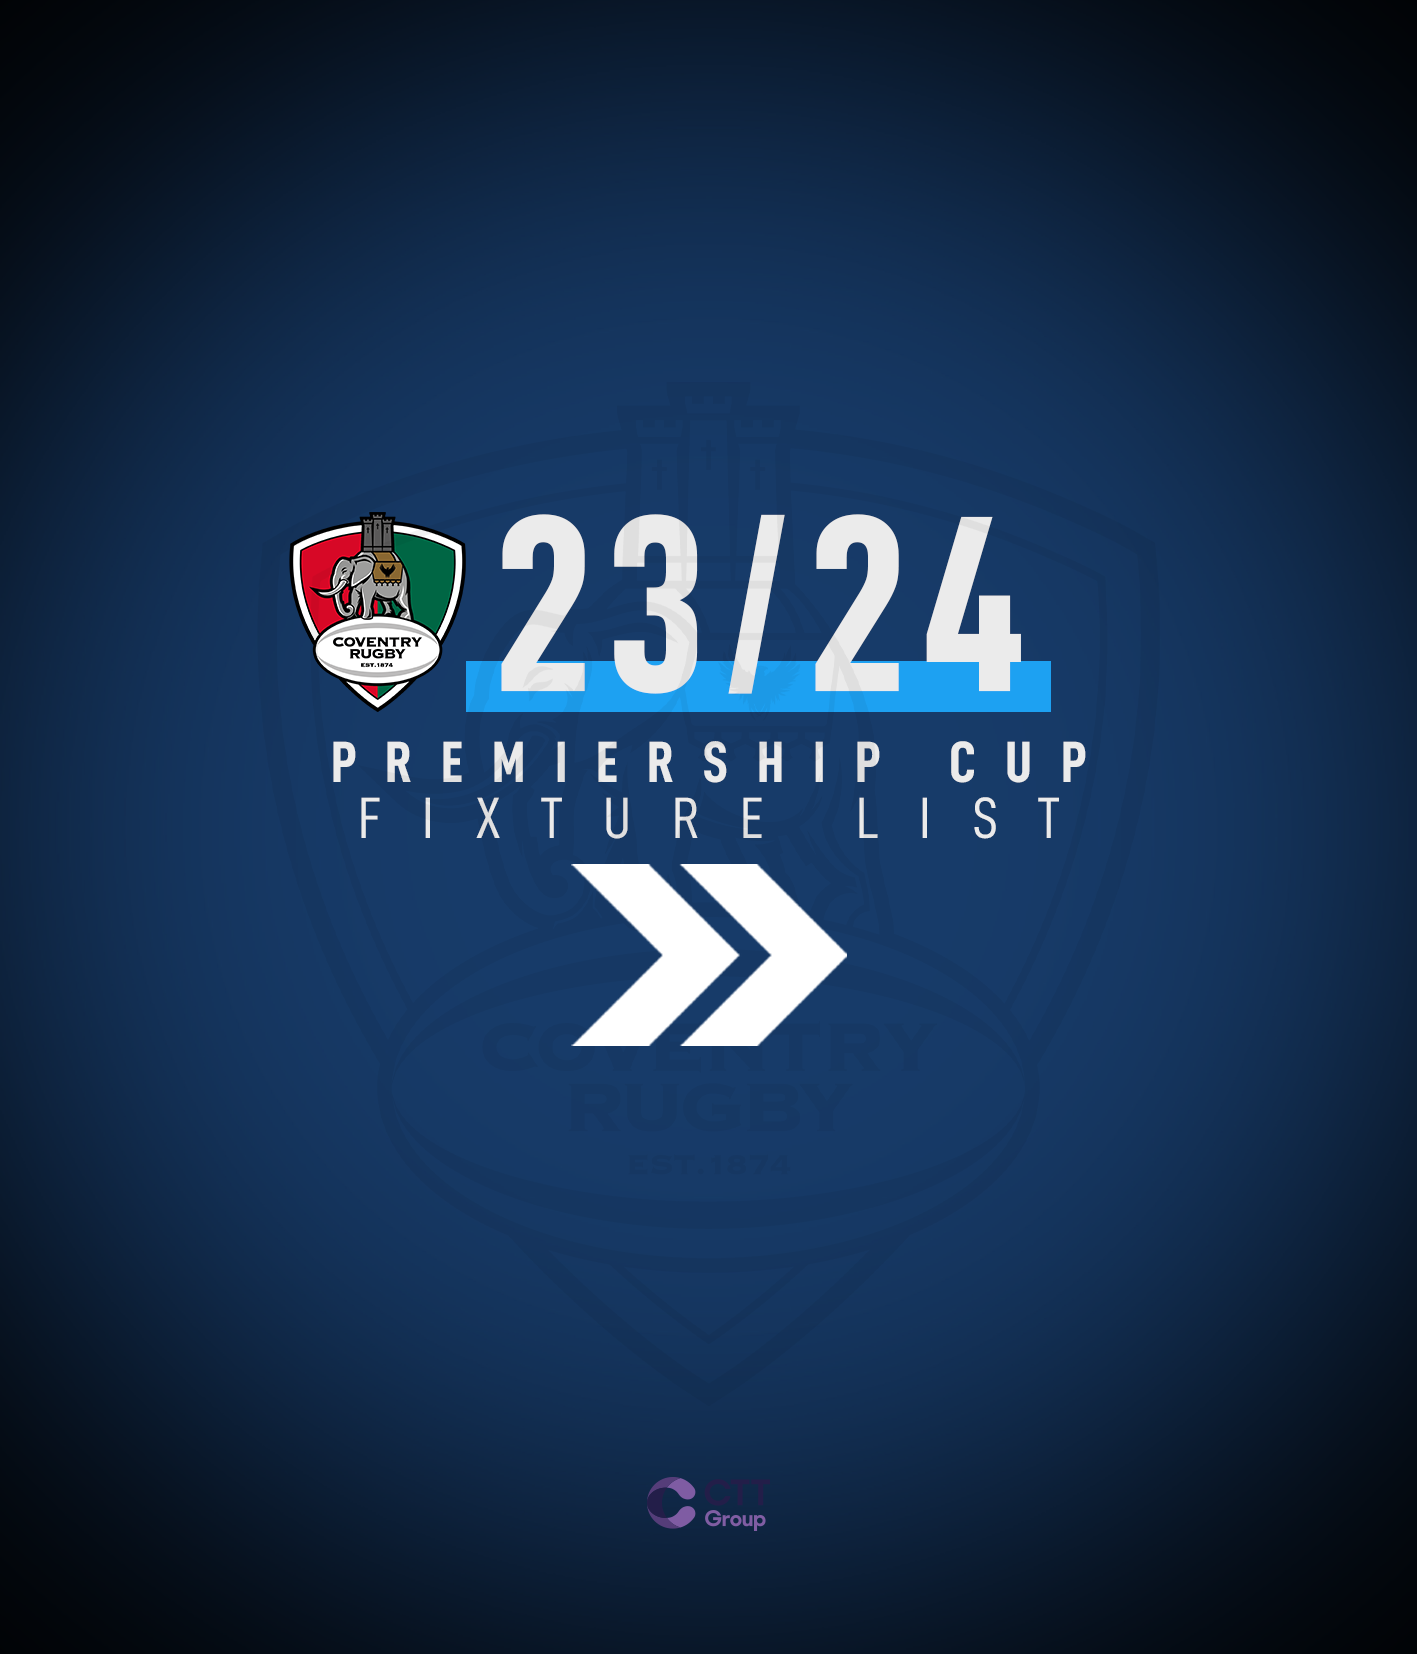 Premiership Cup Fixtures Announced!